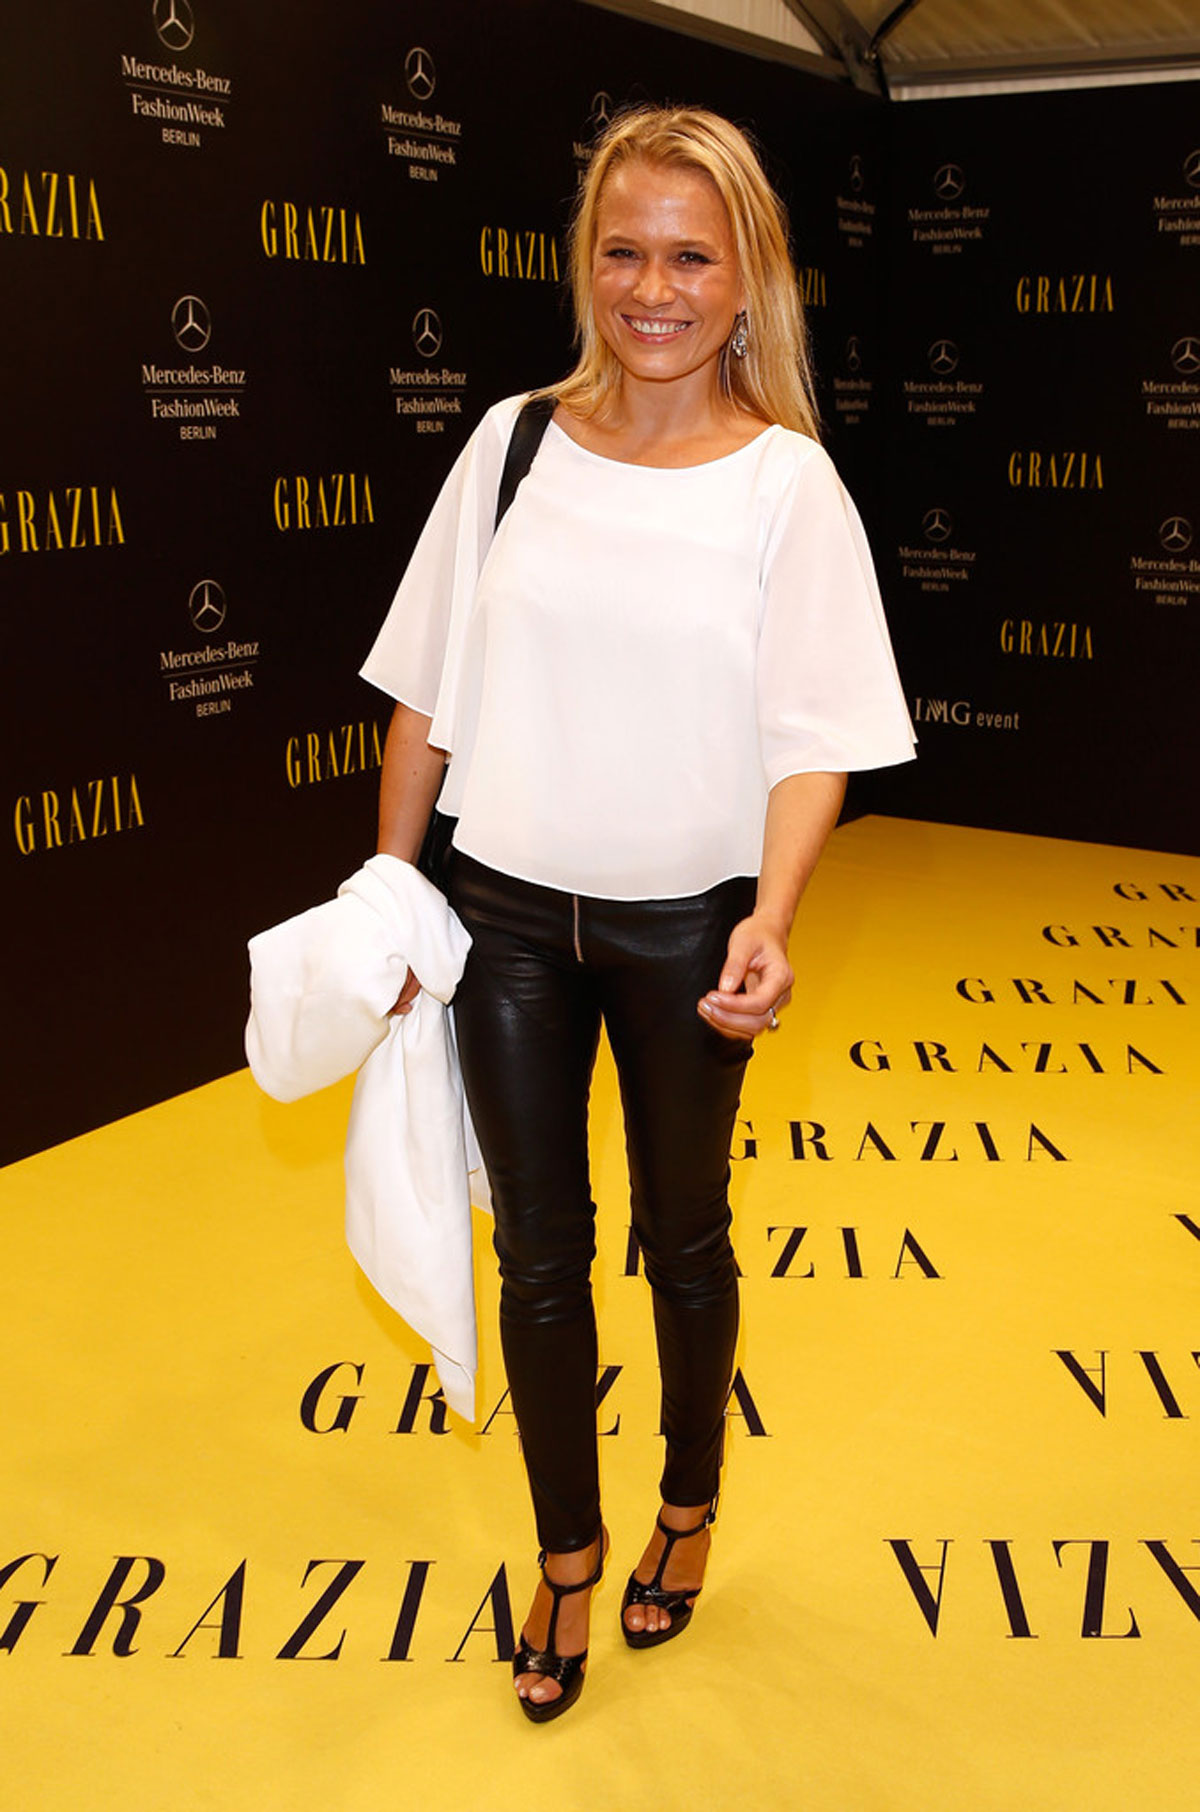 Nova Meierhenrich attends Opening Night by Grazia fashion show